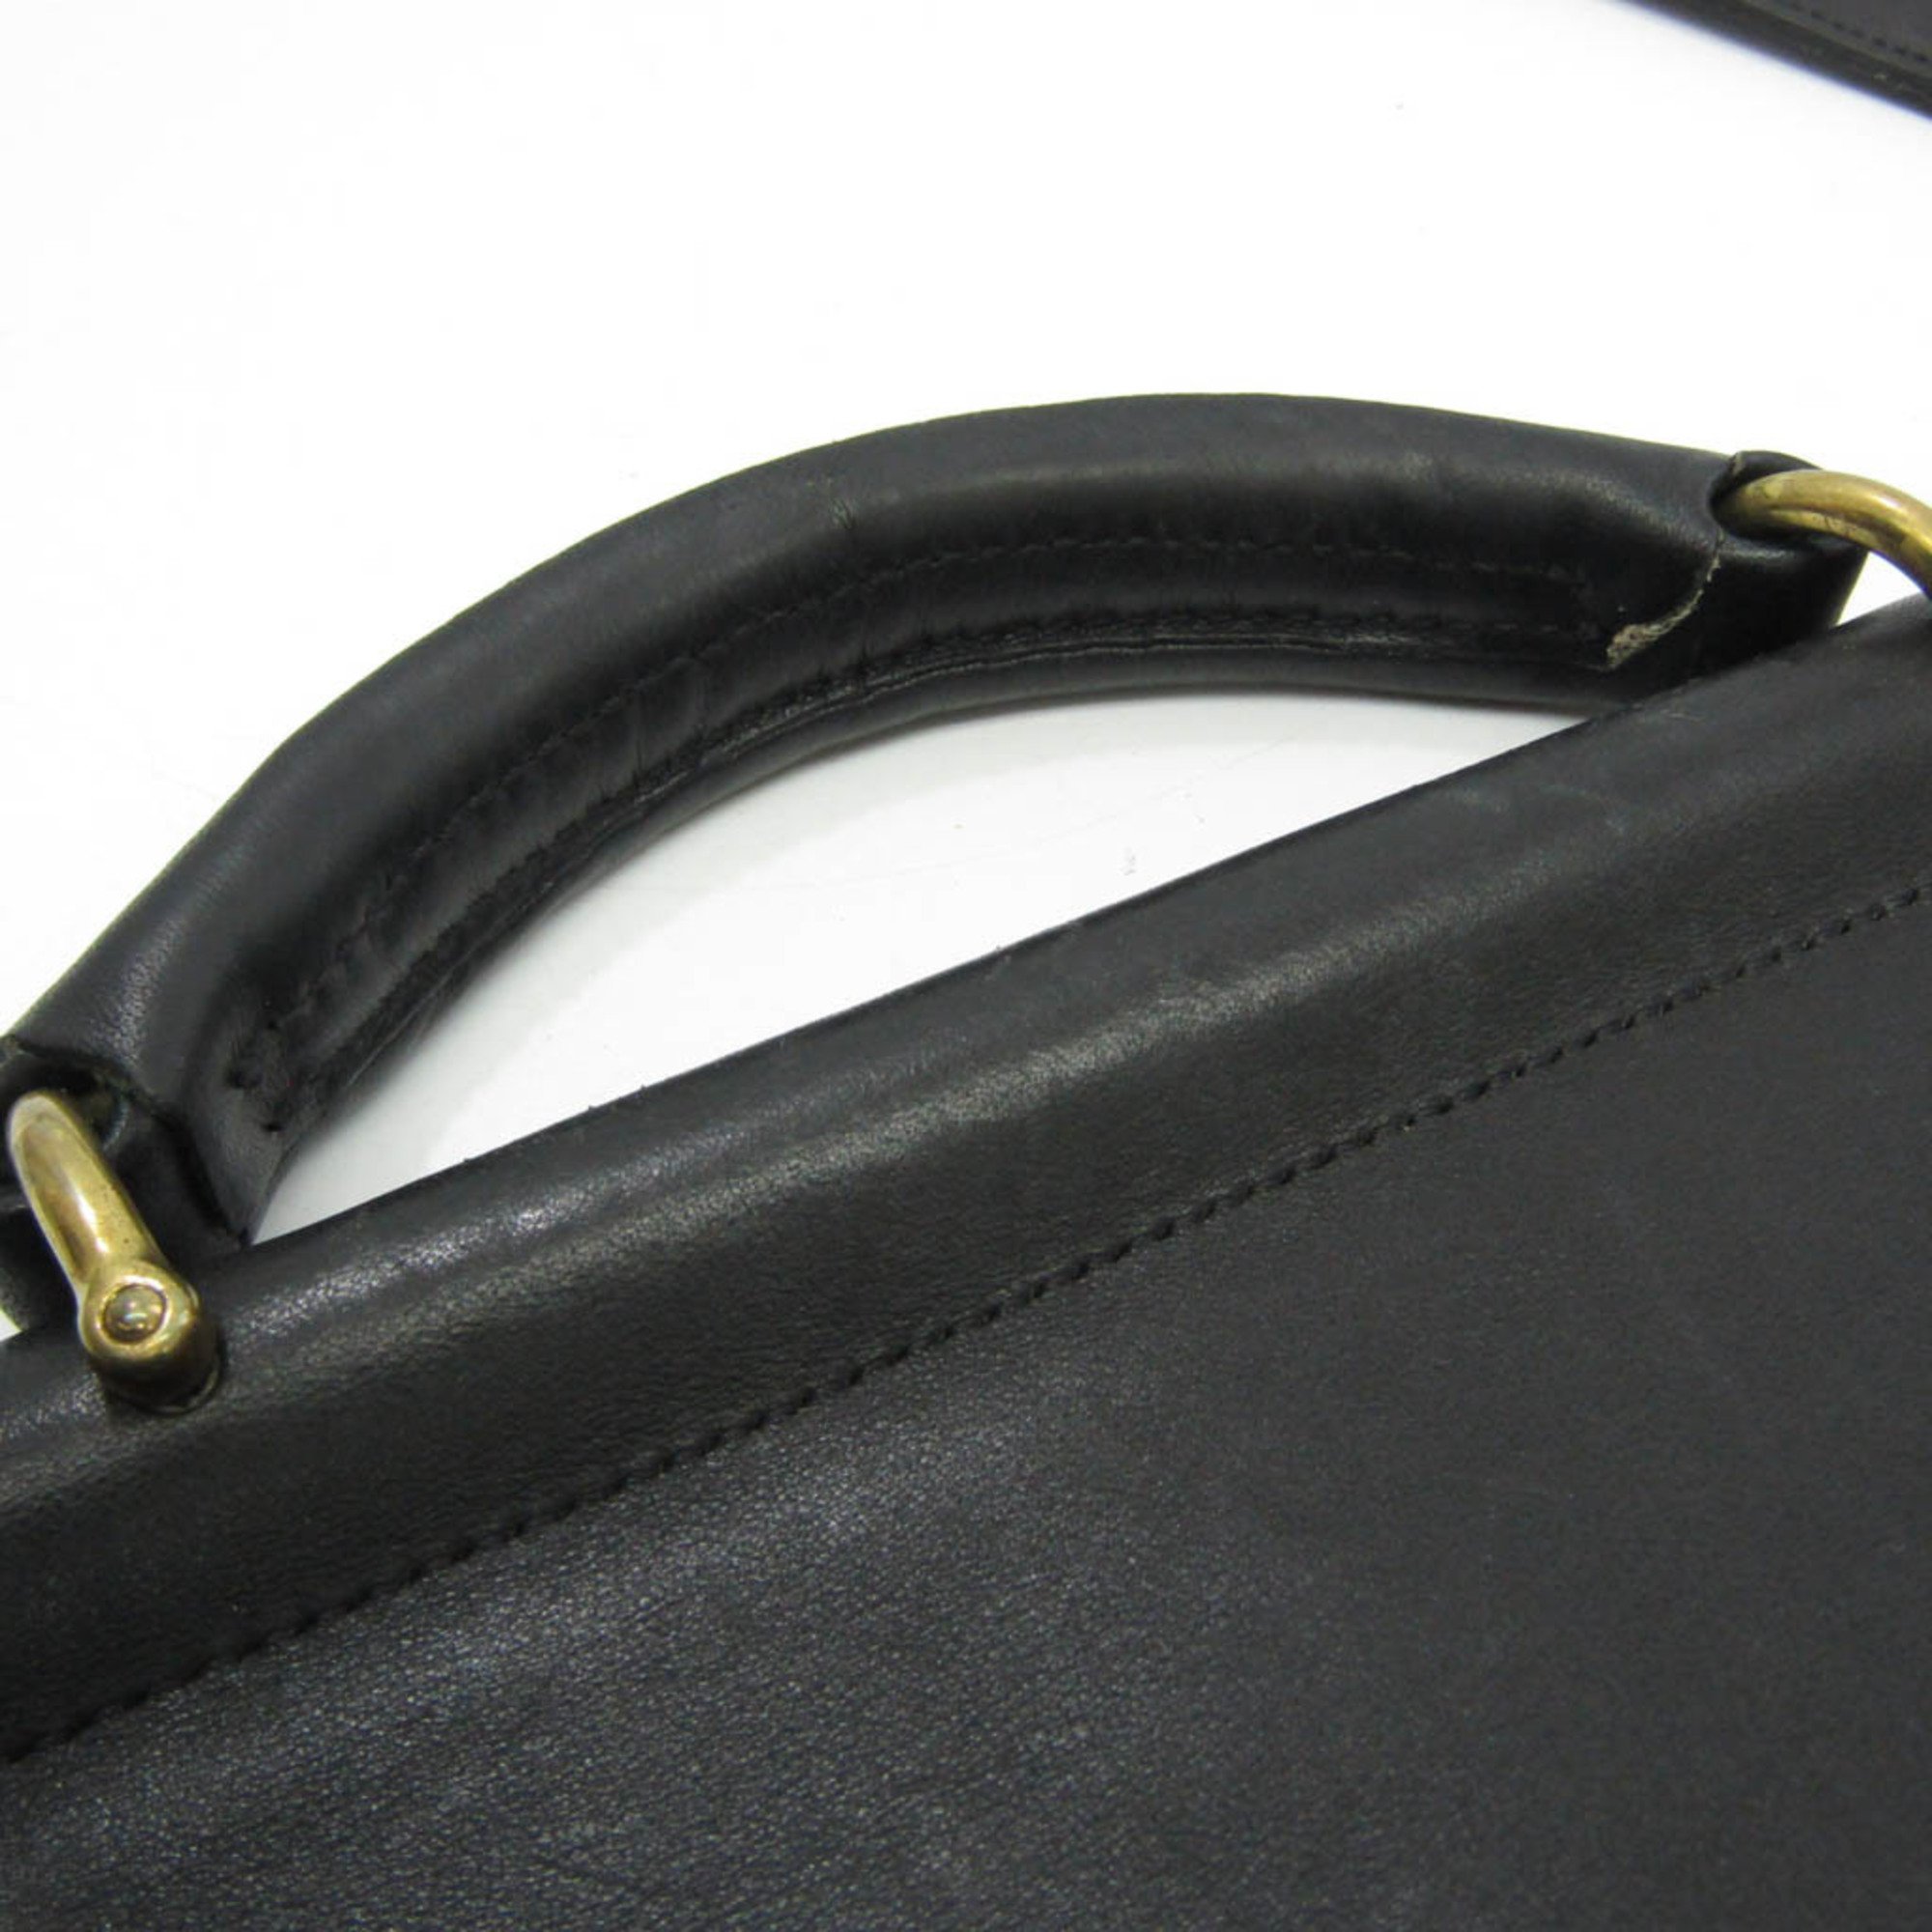 Coach Beekman Brief 5266 Men's Leather Briefcase,Shoulder Bag Black